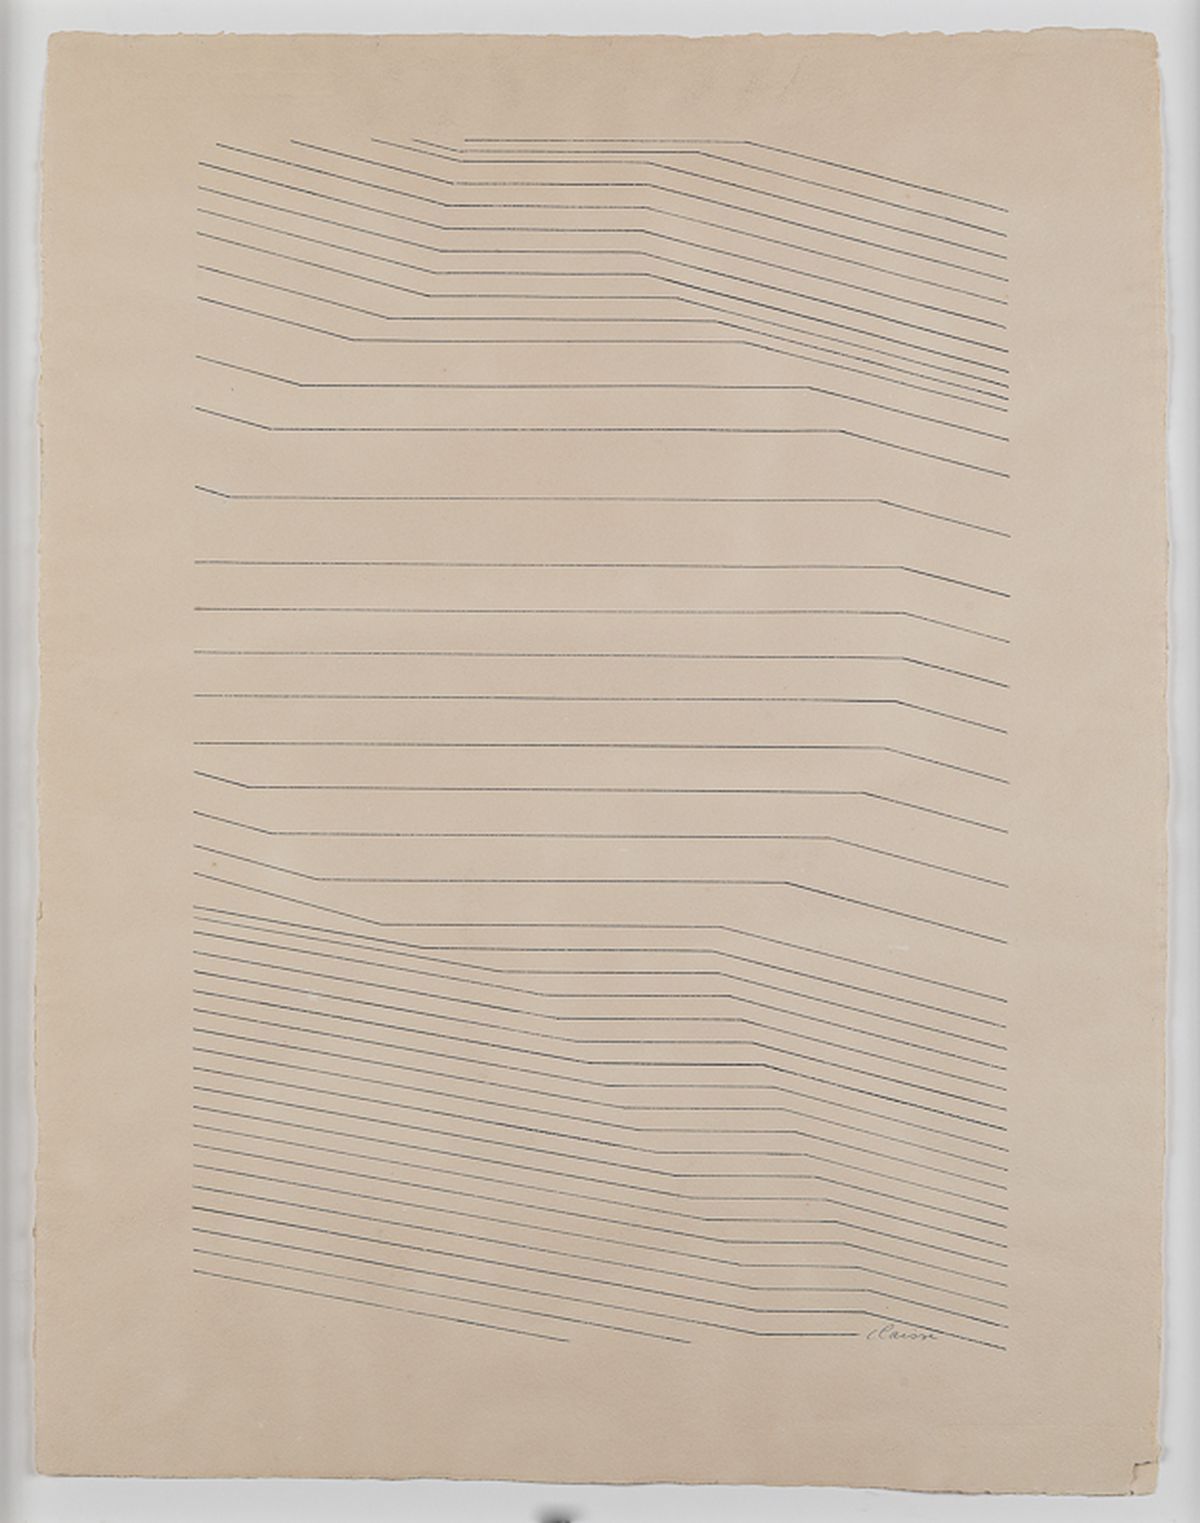 Null 
热纳维耶夫-克莱斯(1935-2018)
构成
纸上水墨画，右下角有签名
65 x 50厘米